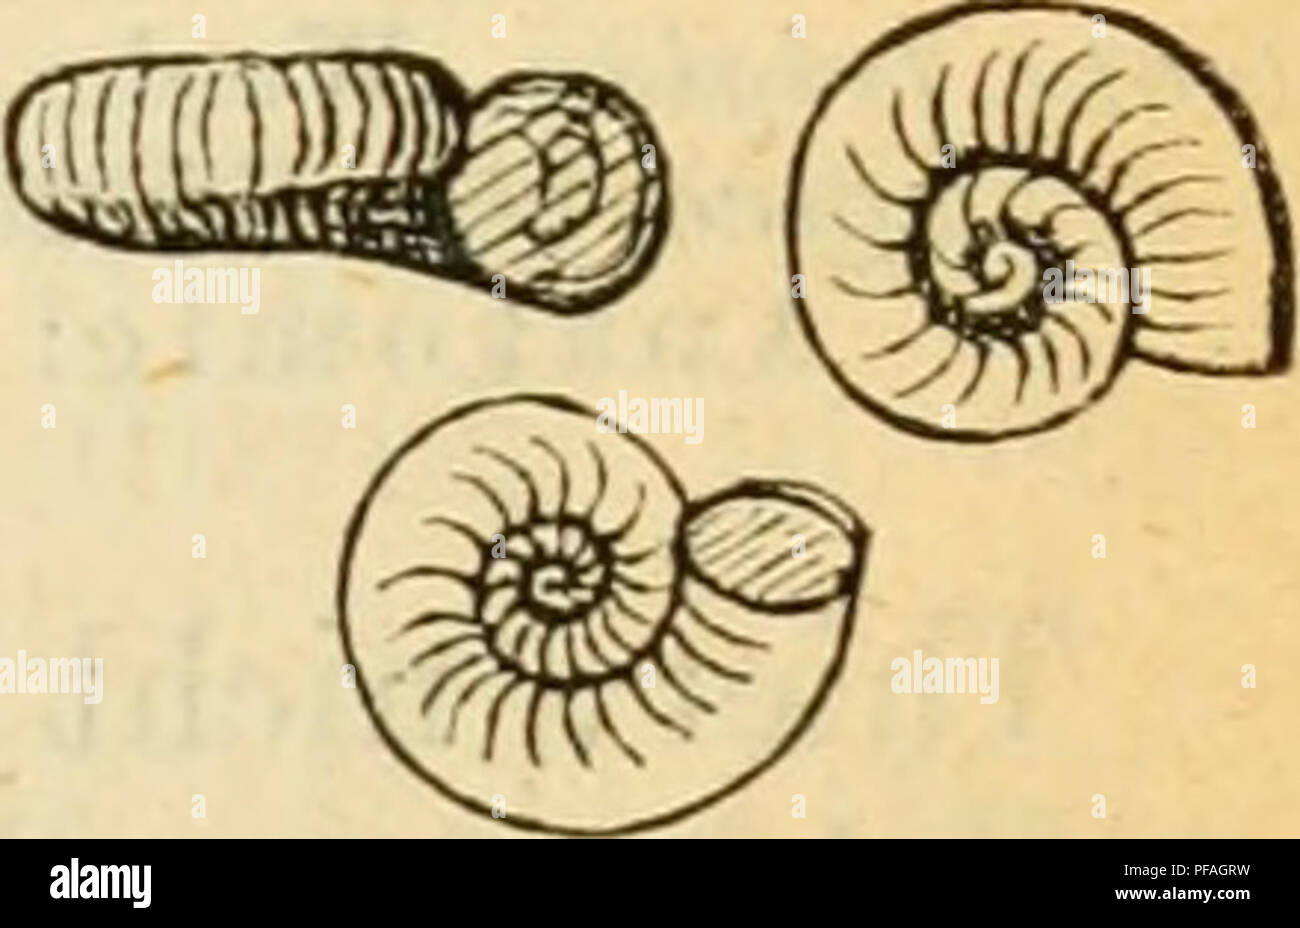 . Deutsche excursions-mollusken-fauna. Mollusks. 309 8. Valvata cristata^ Müller. Valvata cristata, Müller, Verm. hist. II. 1774. p. 198. Nerita valvata, Gmelin, Syst. nat. ed. 13. p. 3675. — v. Alten, Augsbnrg p. 111 t. 13 flg. 24. Valvata planorhis, Drap., tab. p. 42. — Hist. moll. p. 41 t. 1 fig. 34—35. — — Sturm, Fauna VI. 3. t. 3. — cristata, Schroeter, Flussconch. p. 240 t. 5 fig. 26. — C. Pfeiffer, Na- turg. I. p. 101 t. 3 fig. 35. — — Küster, in Chemnitz ed. 2, Mouogr. Palud. p. 88 t. 14 fig. 22—26. — — Stein, Berlin p. 88 t. 2 flg. 30. — Kobelt, Nassau p. 213 t. 5 fig. 23. — — Slavik, Stock Photo